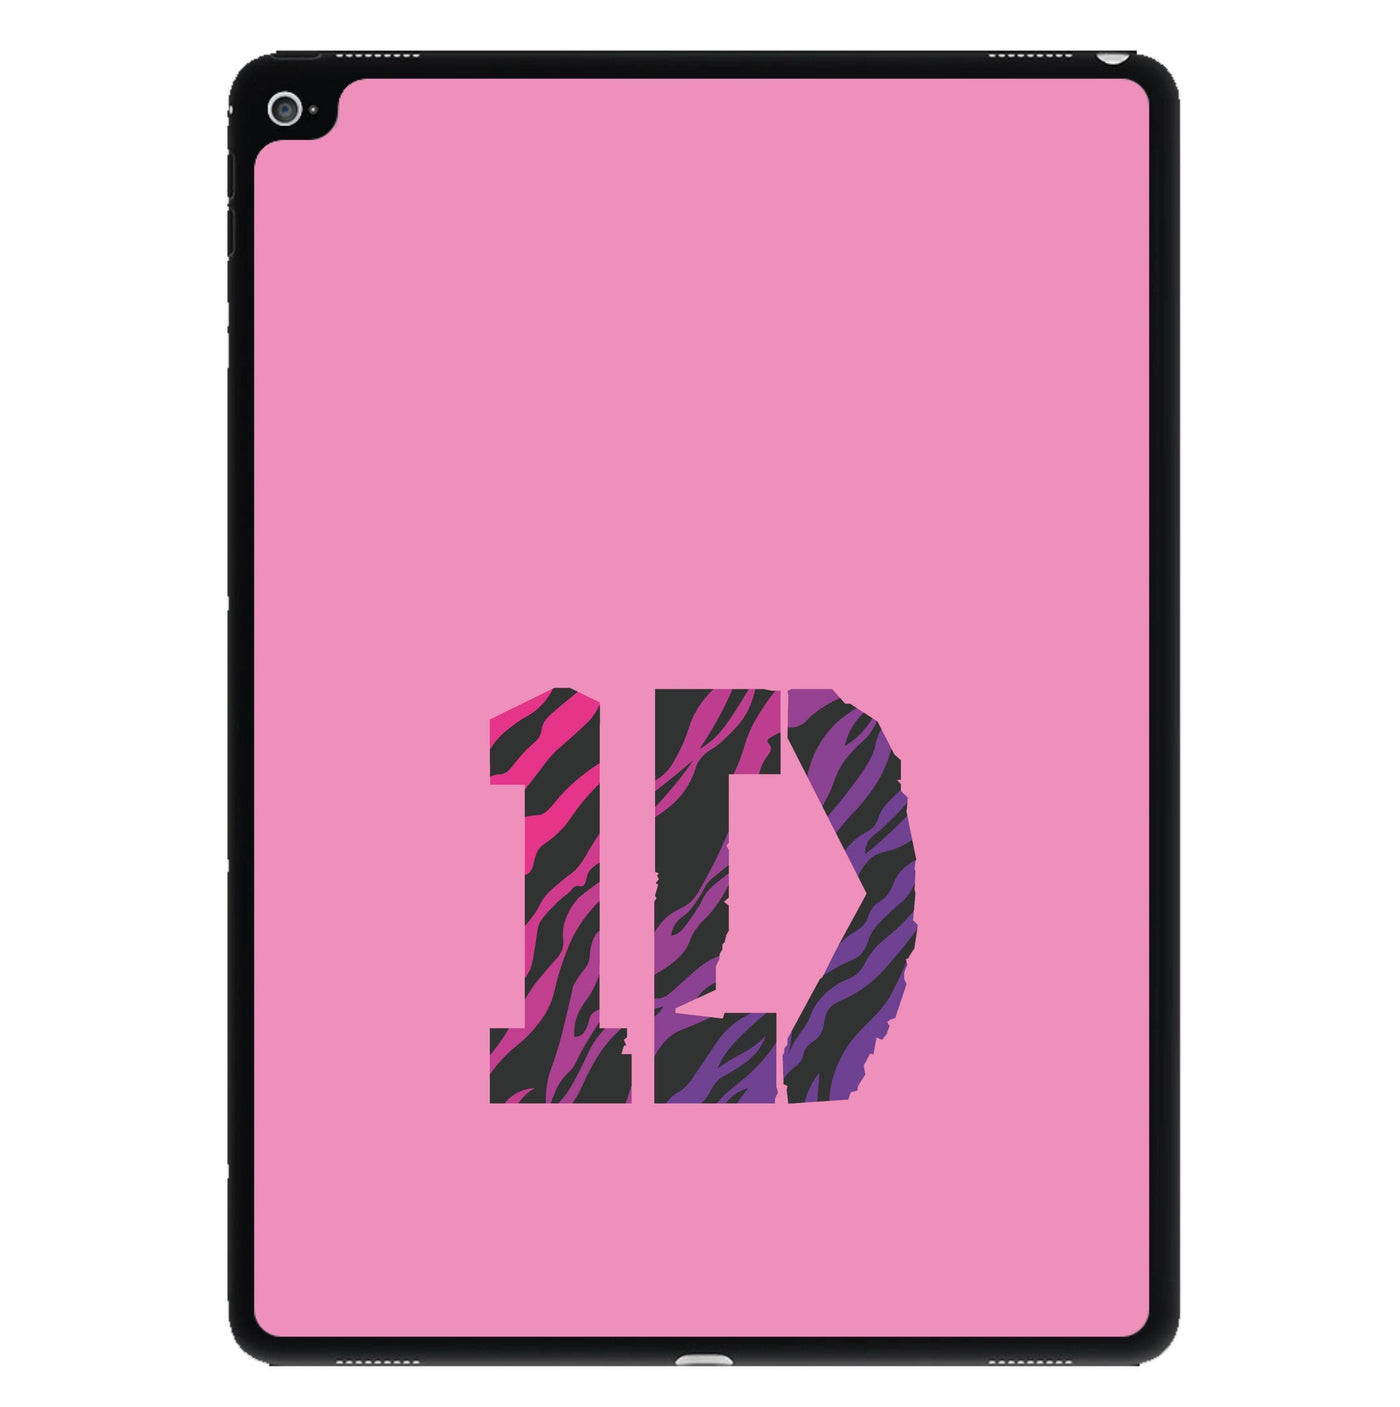 Zebra 1D - One Direction iPad Case